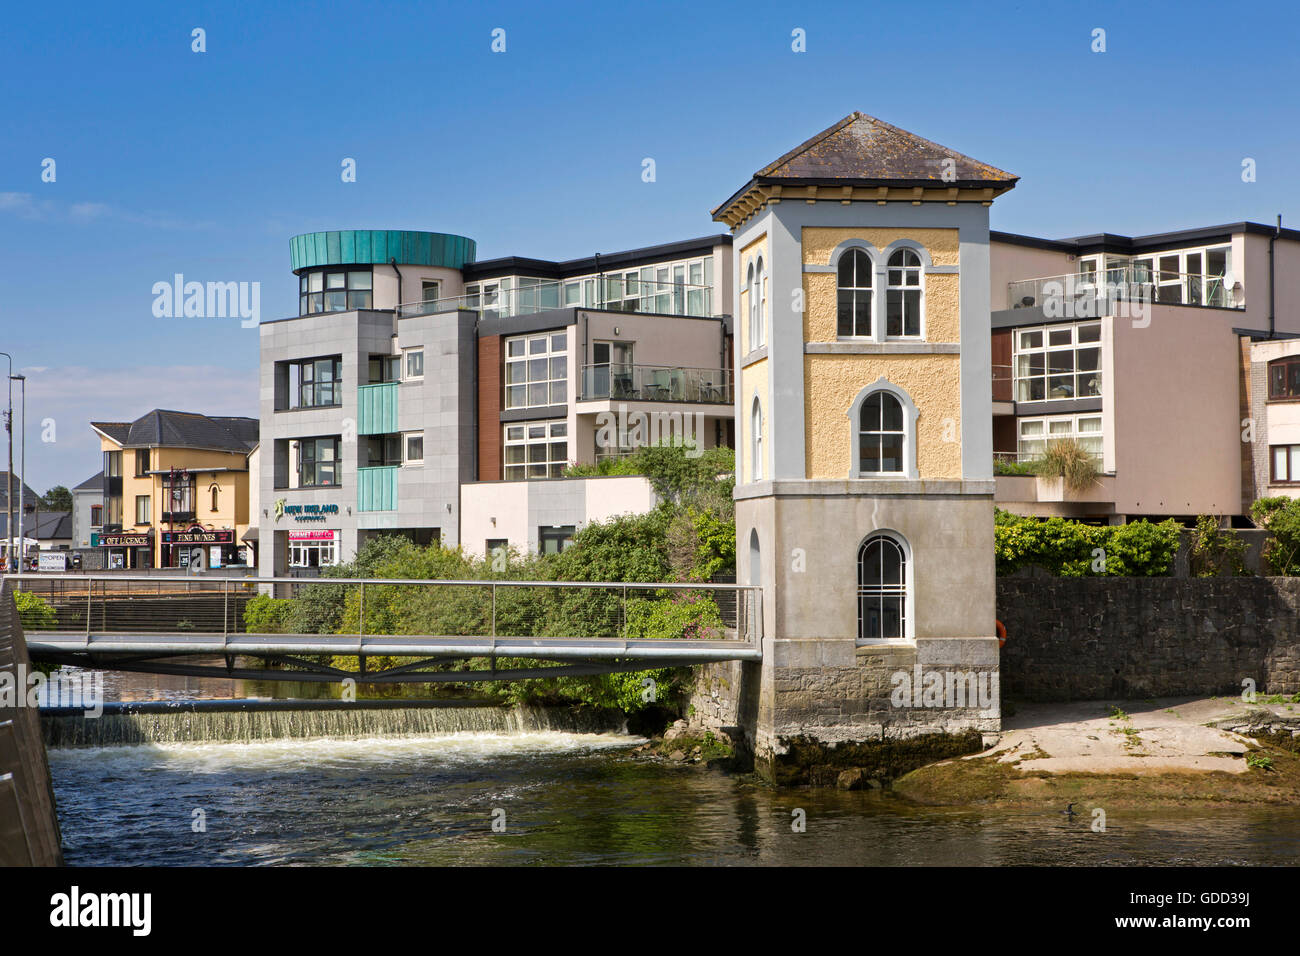 Irland, Co. Galway, Galway, Fischerei Wachturm neben Fluss Corrib bei Wolf Ton Brücke Stockfoto